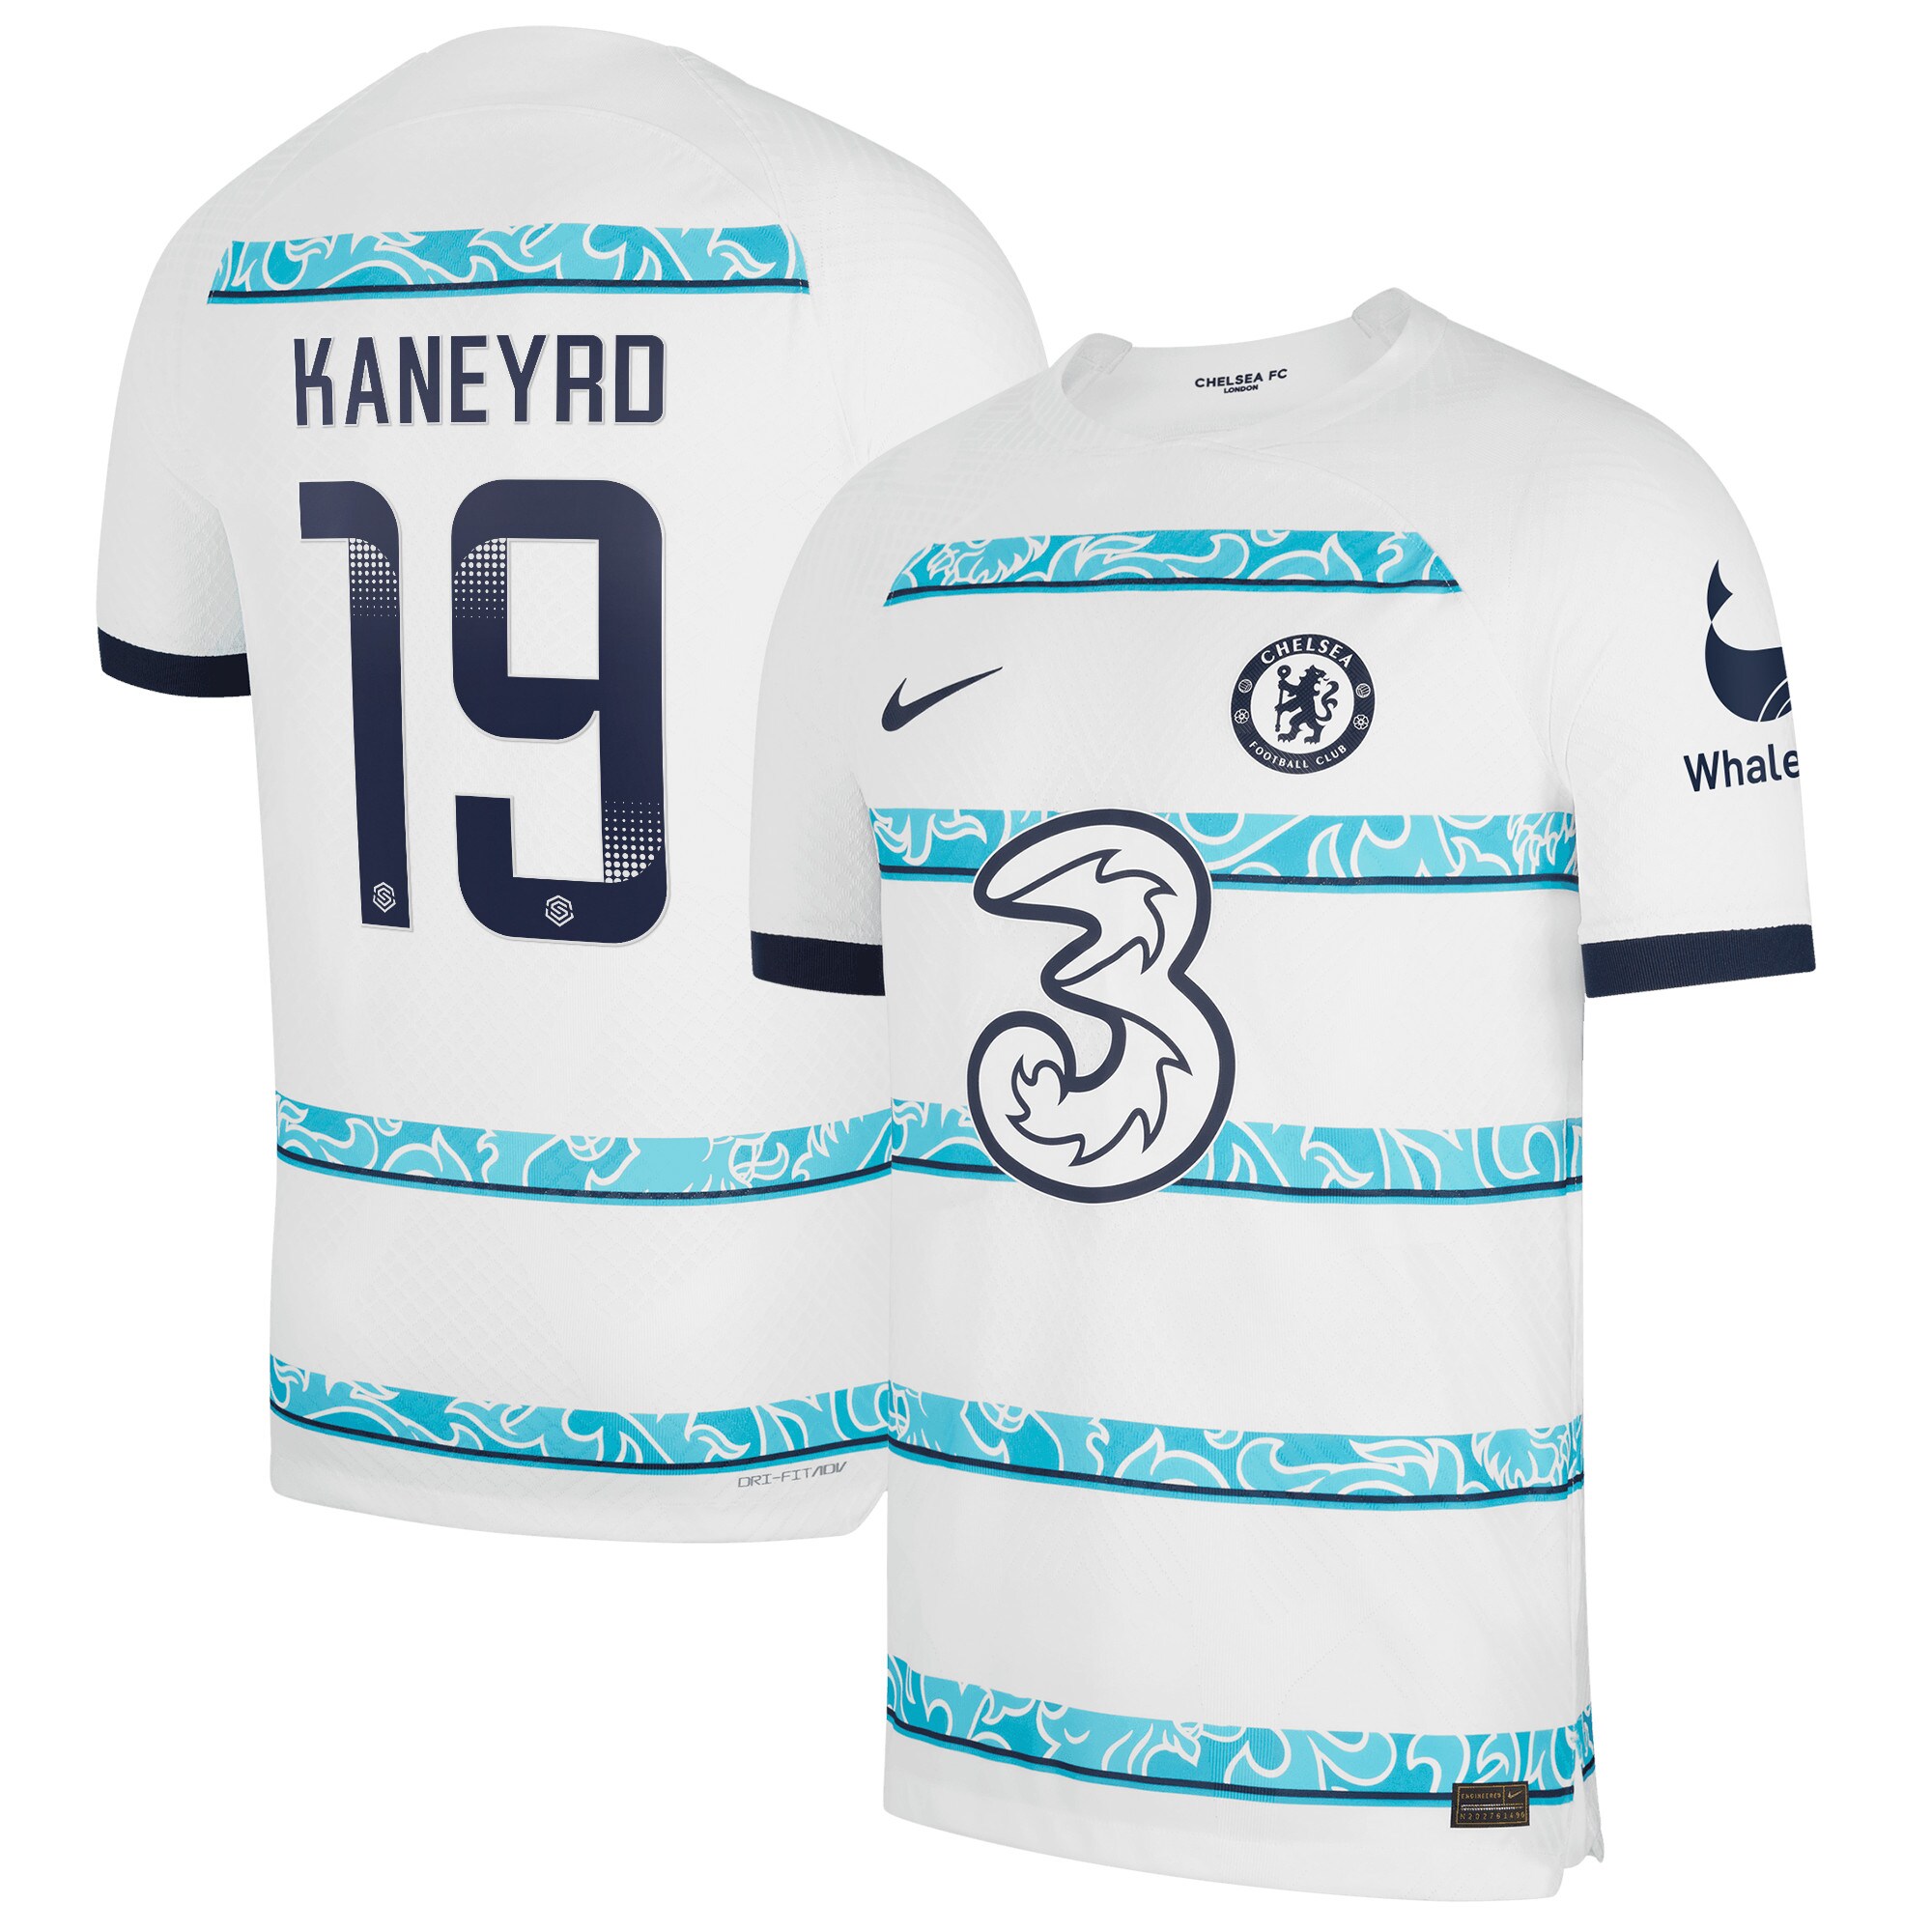 Chelsea WSL Away Vapor Match Shirt 2022-23 with Kaneyrd 19 printing